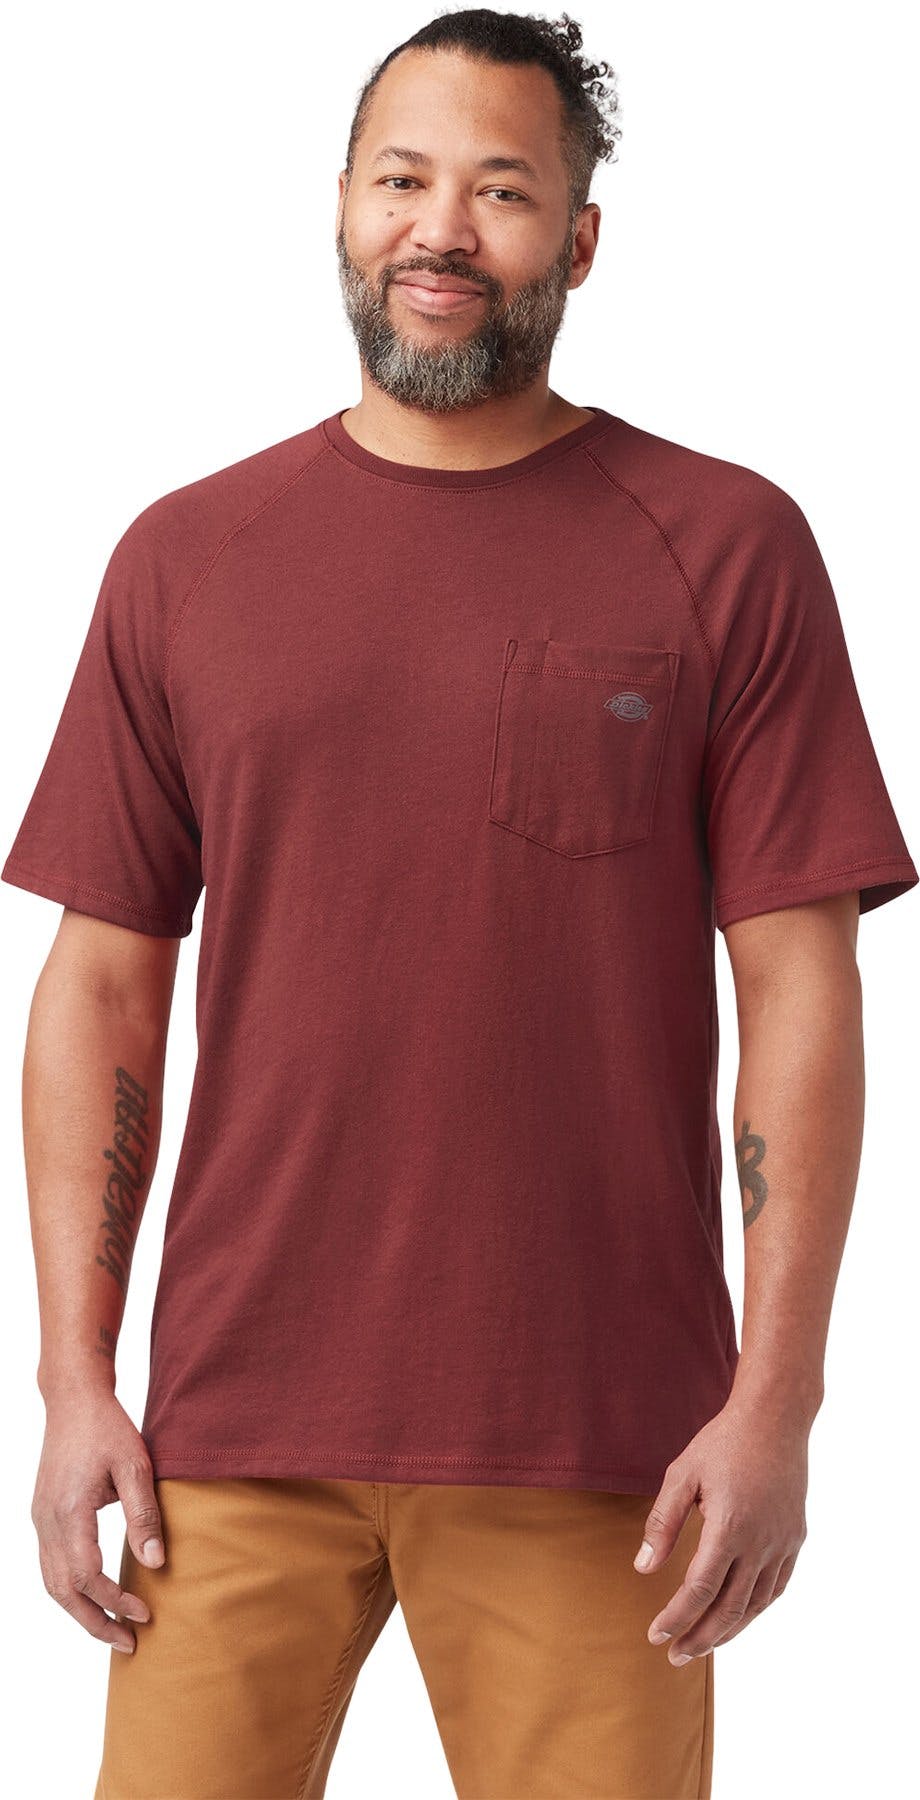 Product image for Cooling Short Sleeve Pocket T-Shirt - Men's